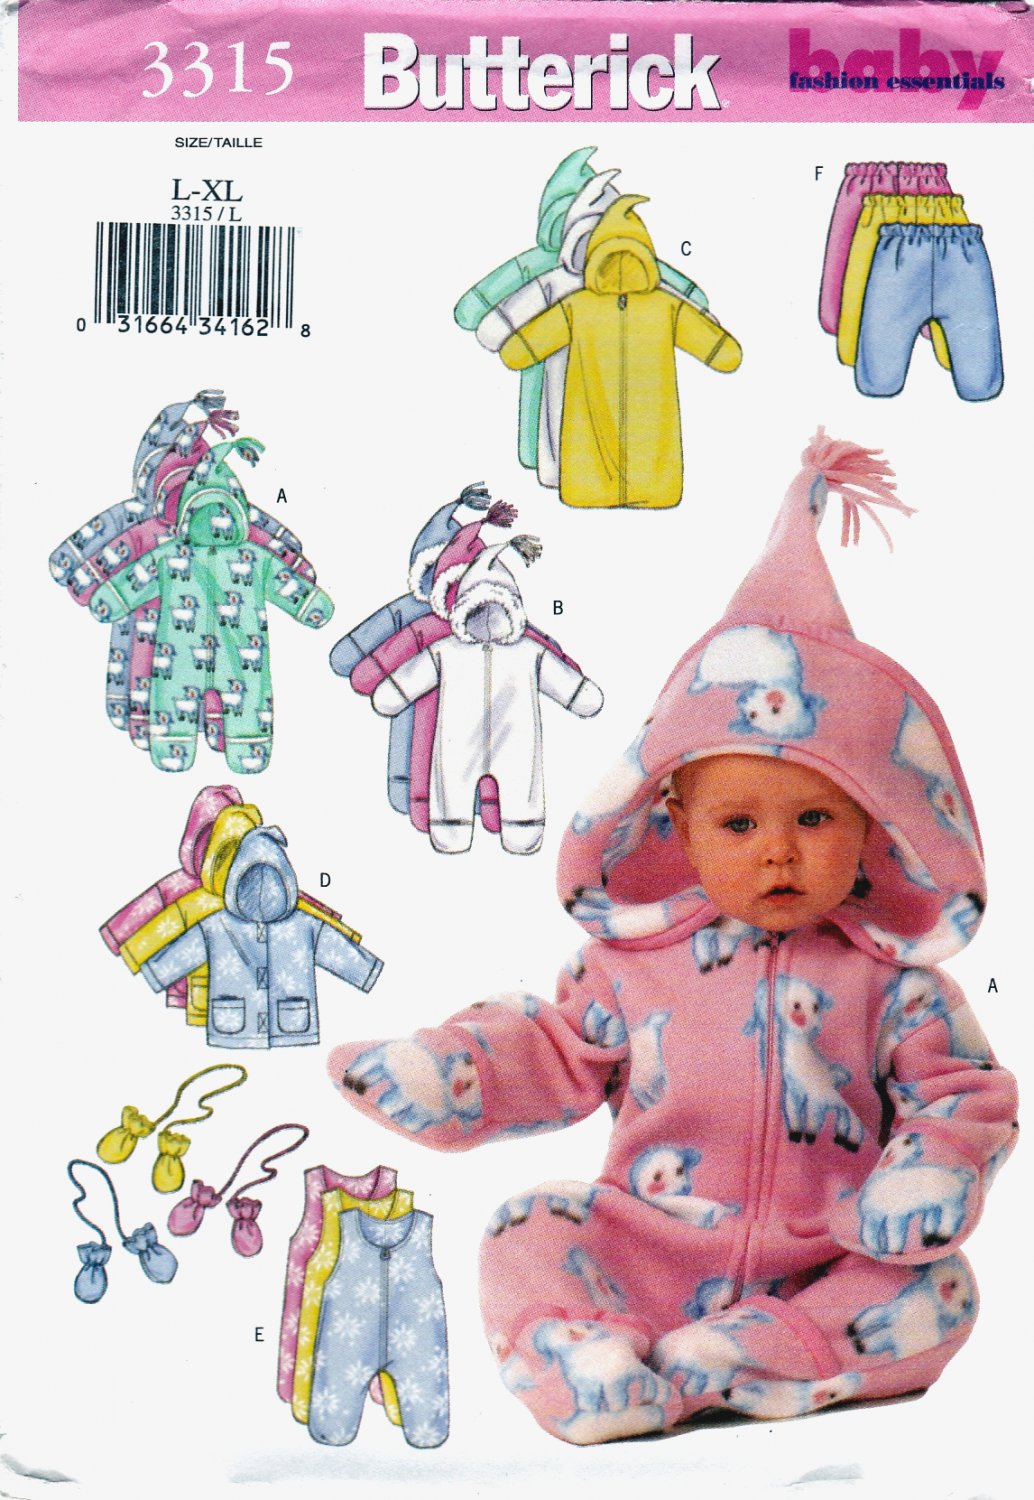 Butterick 3315 Infant Bunting Jacket Jumpsuit Pants Mittens Sewing Pattern Sizes L-XL